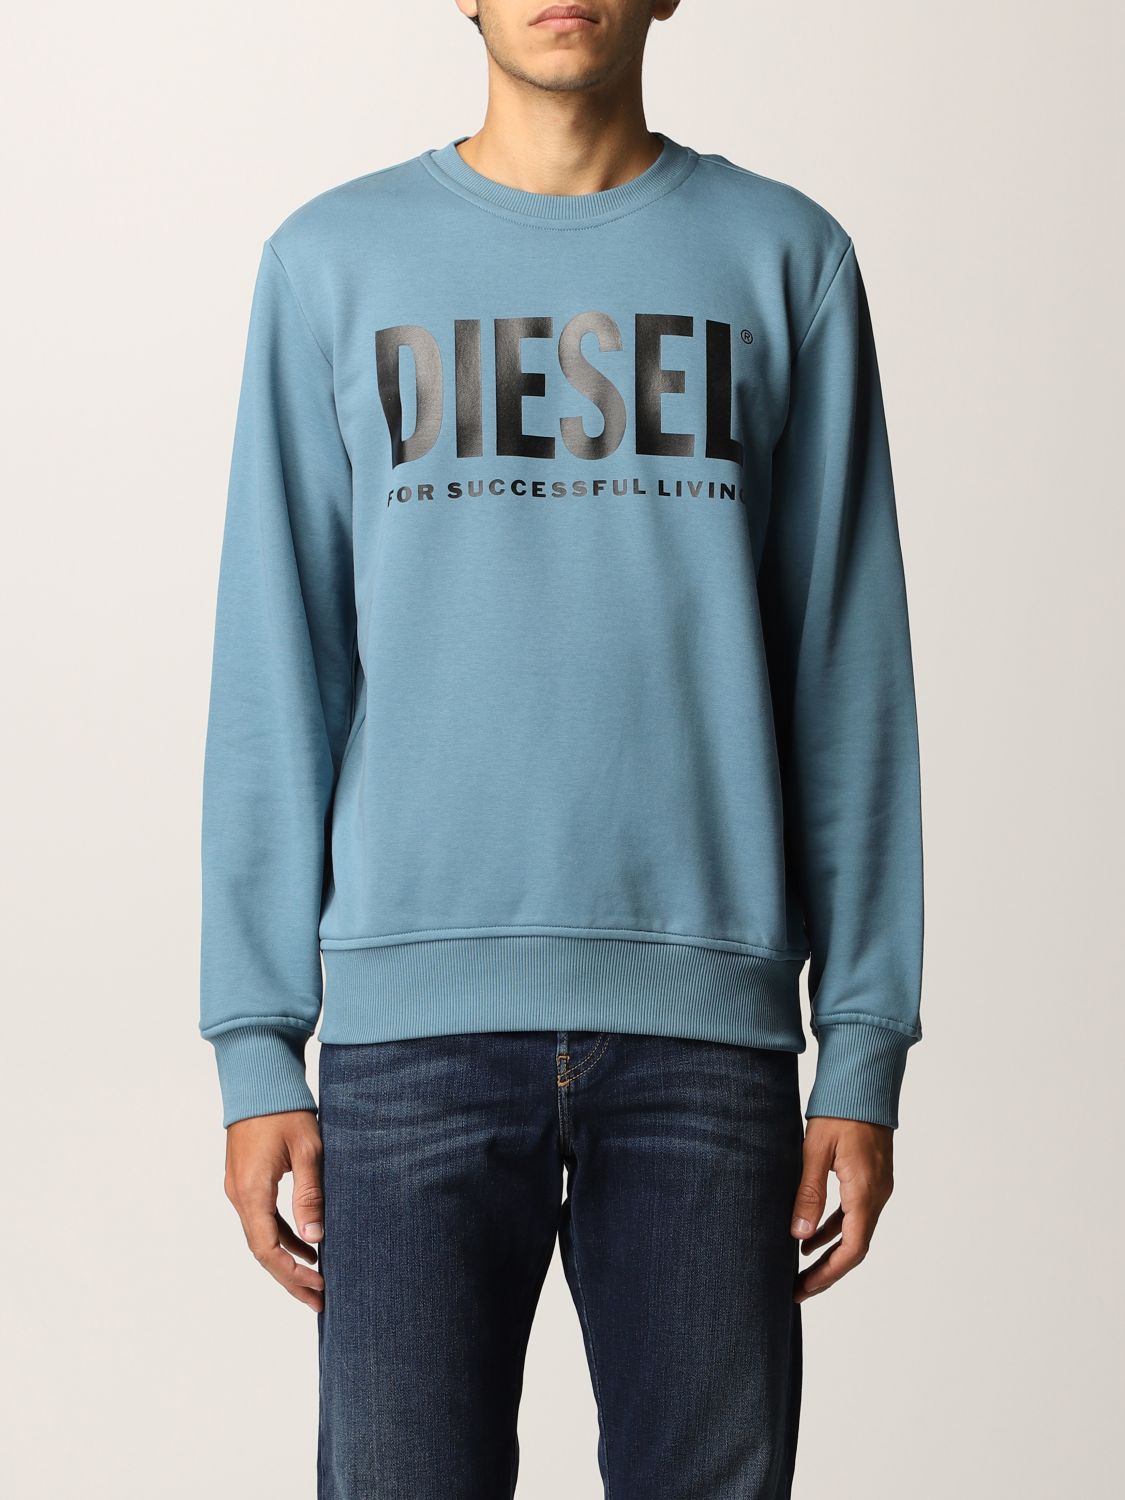 DIESEL: sweatshirt in cotton with logo - Avion | Sweatshirt Diesel ...